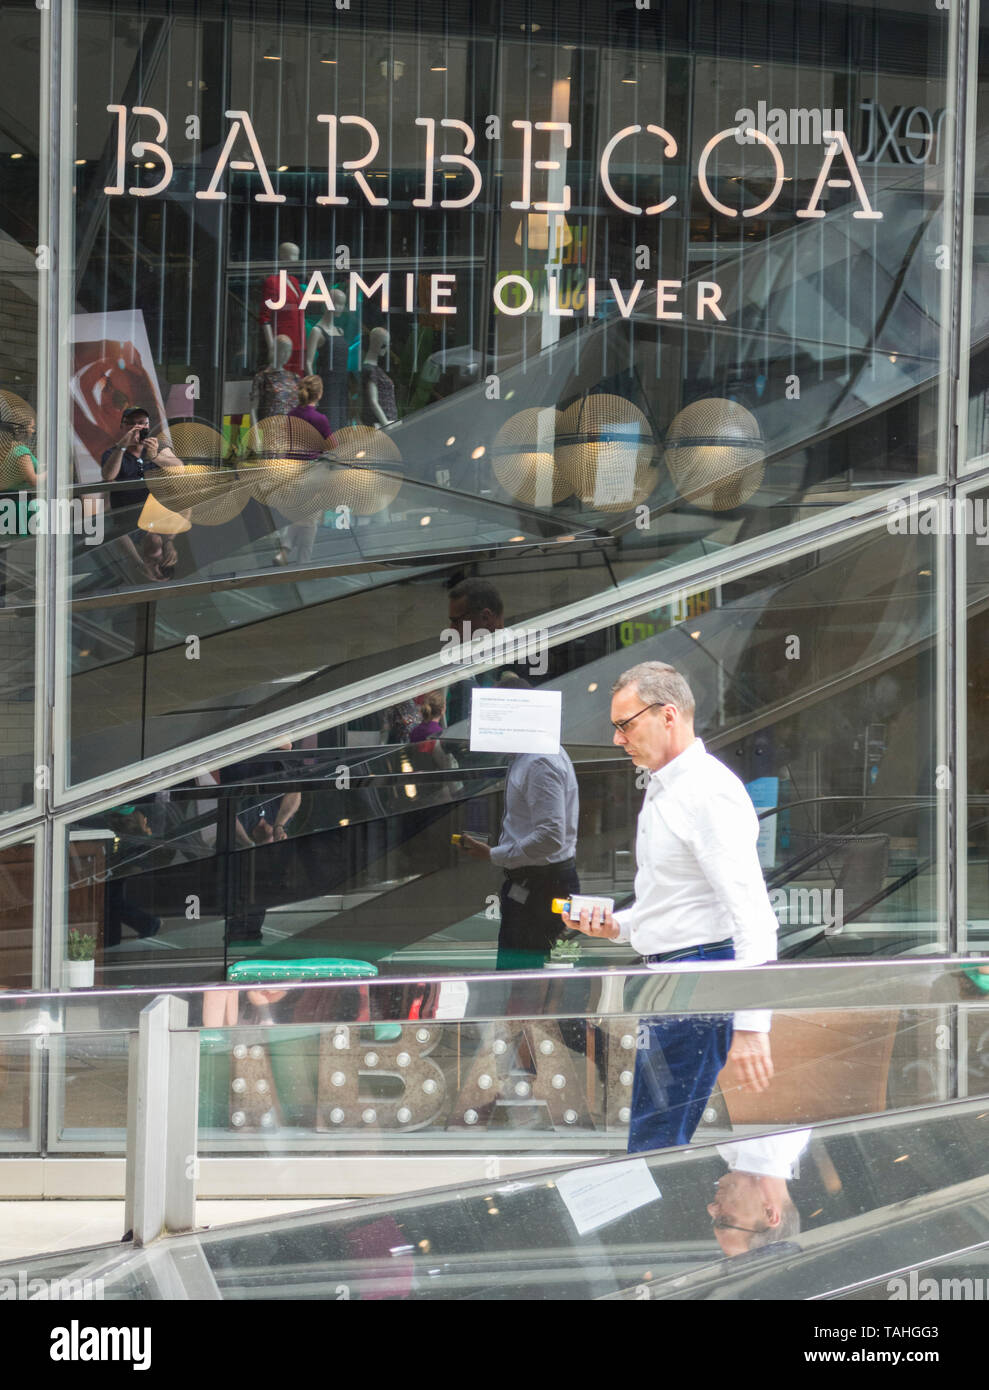 Exterior of Jamie Oliver's Barbecoa restaurant, New Change, City of London, London, EC4 Stock Photo